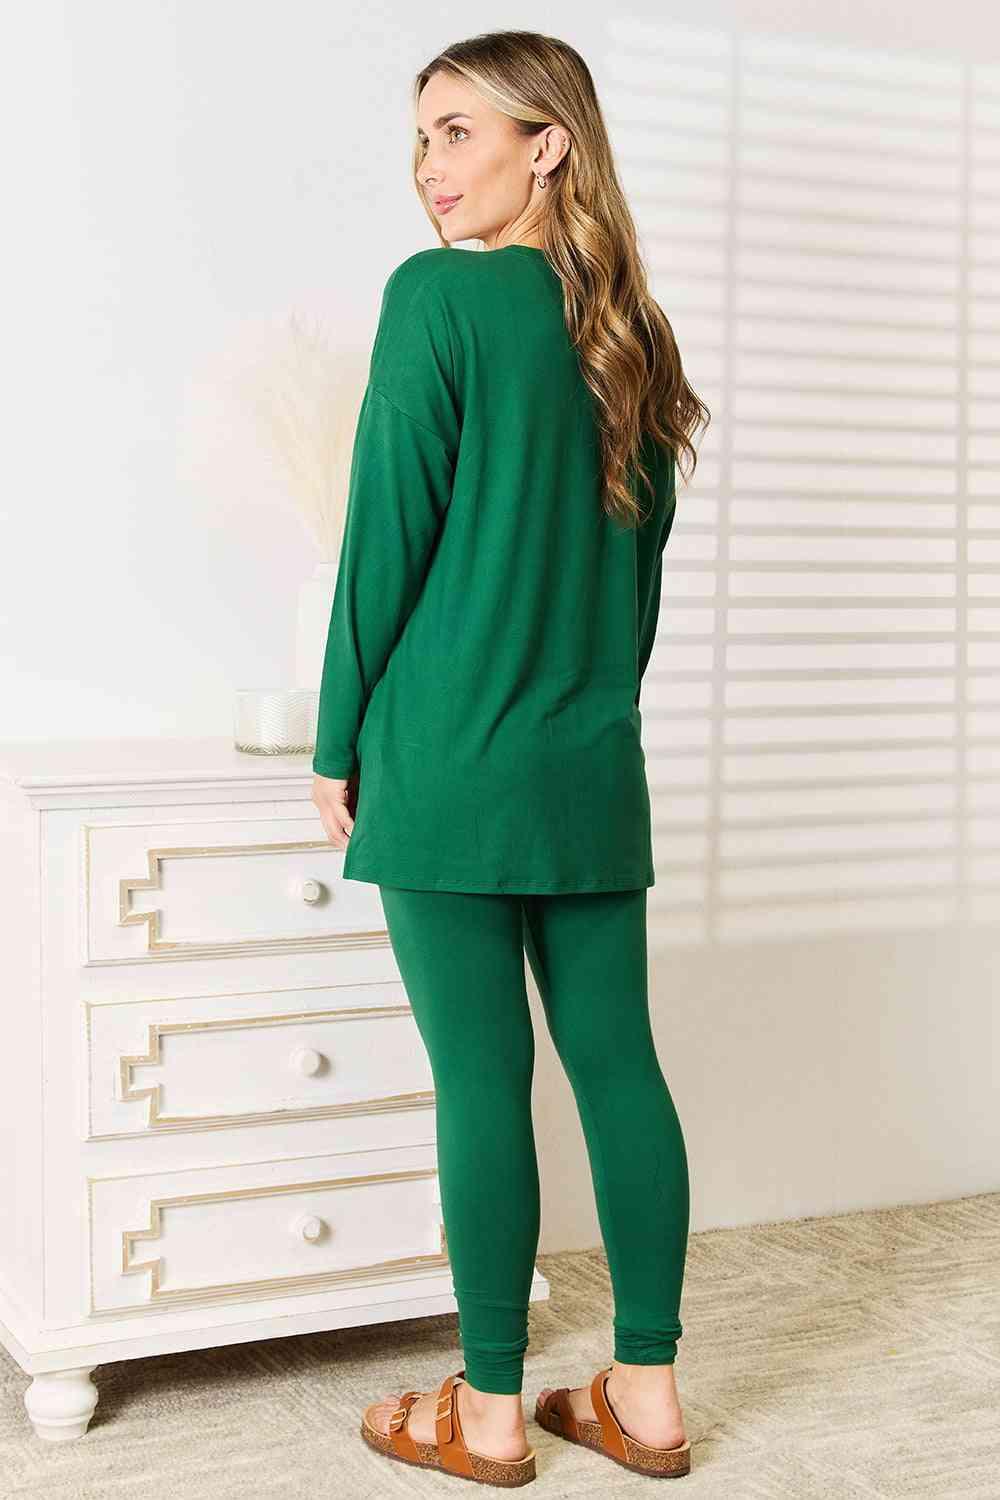 Zenana Lazy Days Full Size Long Sleeve Top and Leggings Set - SwagglyLife Home & Fashion